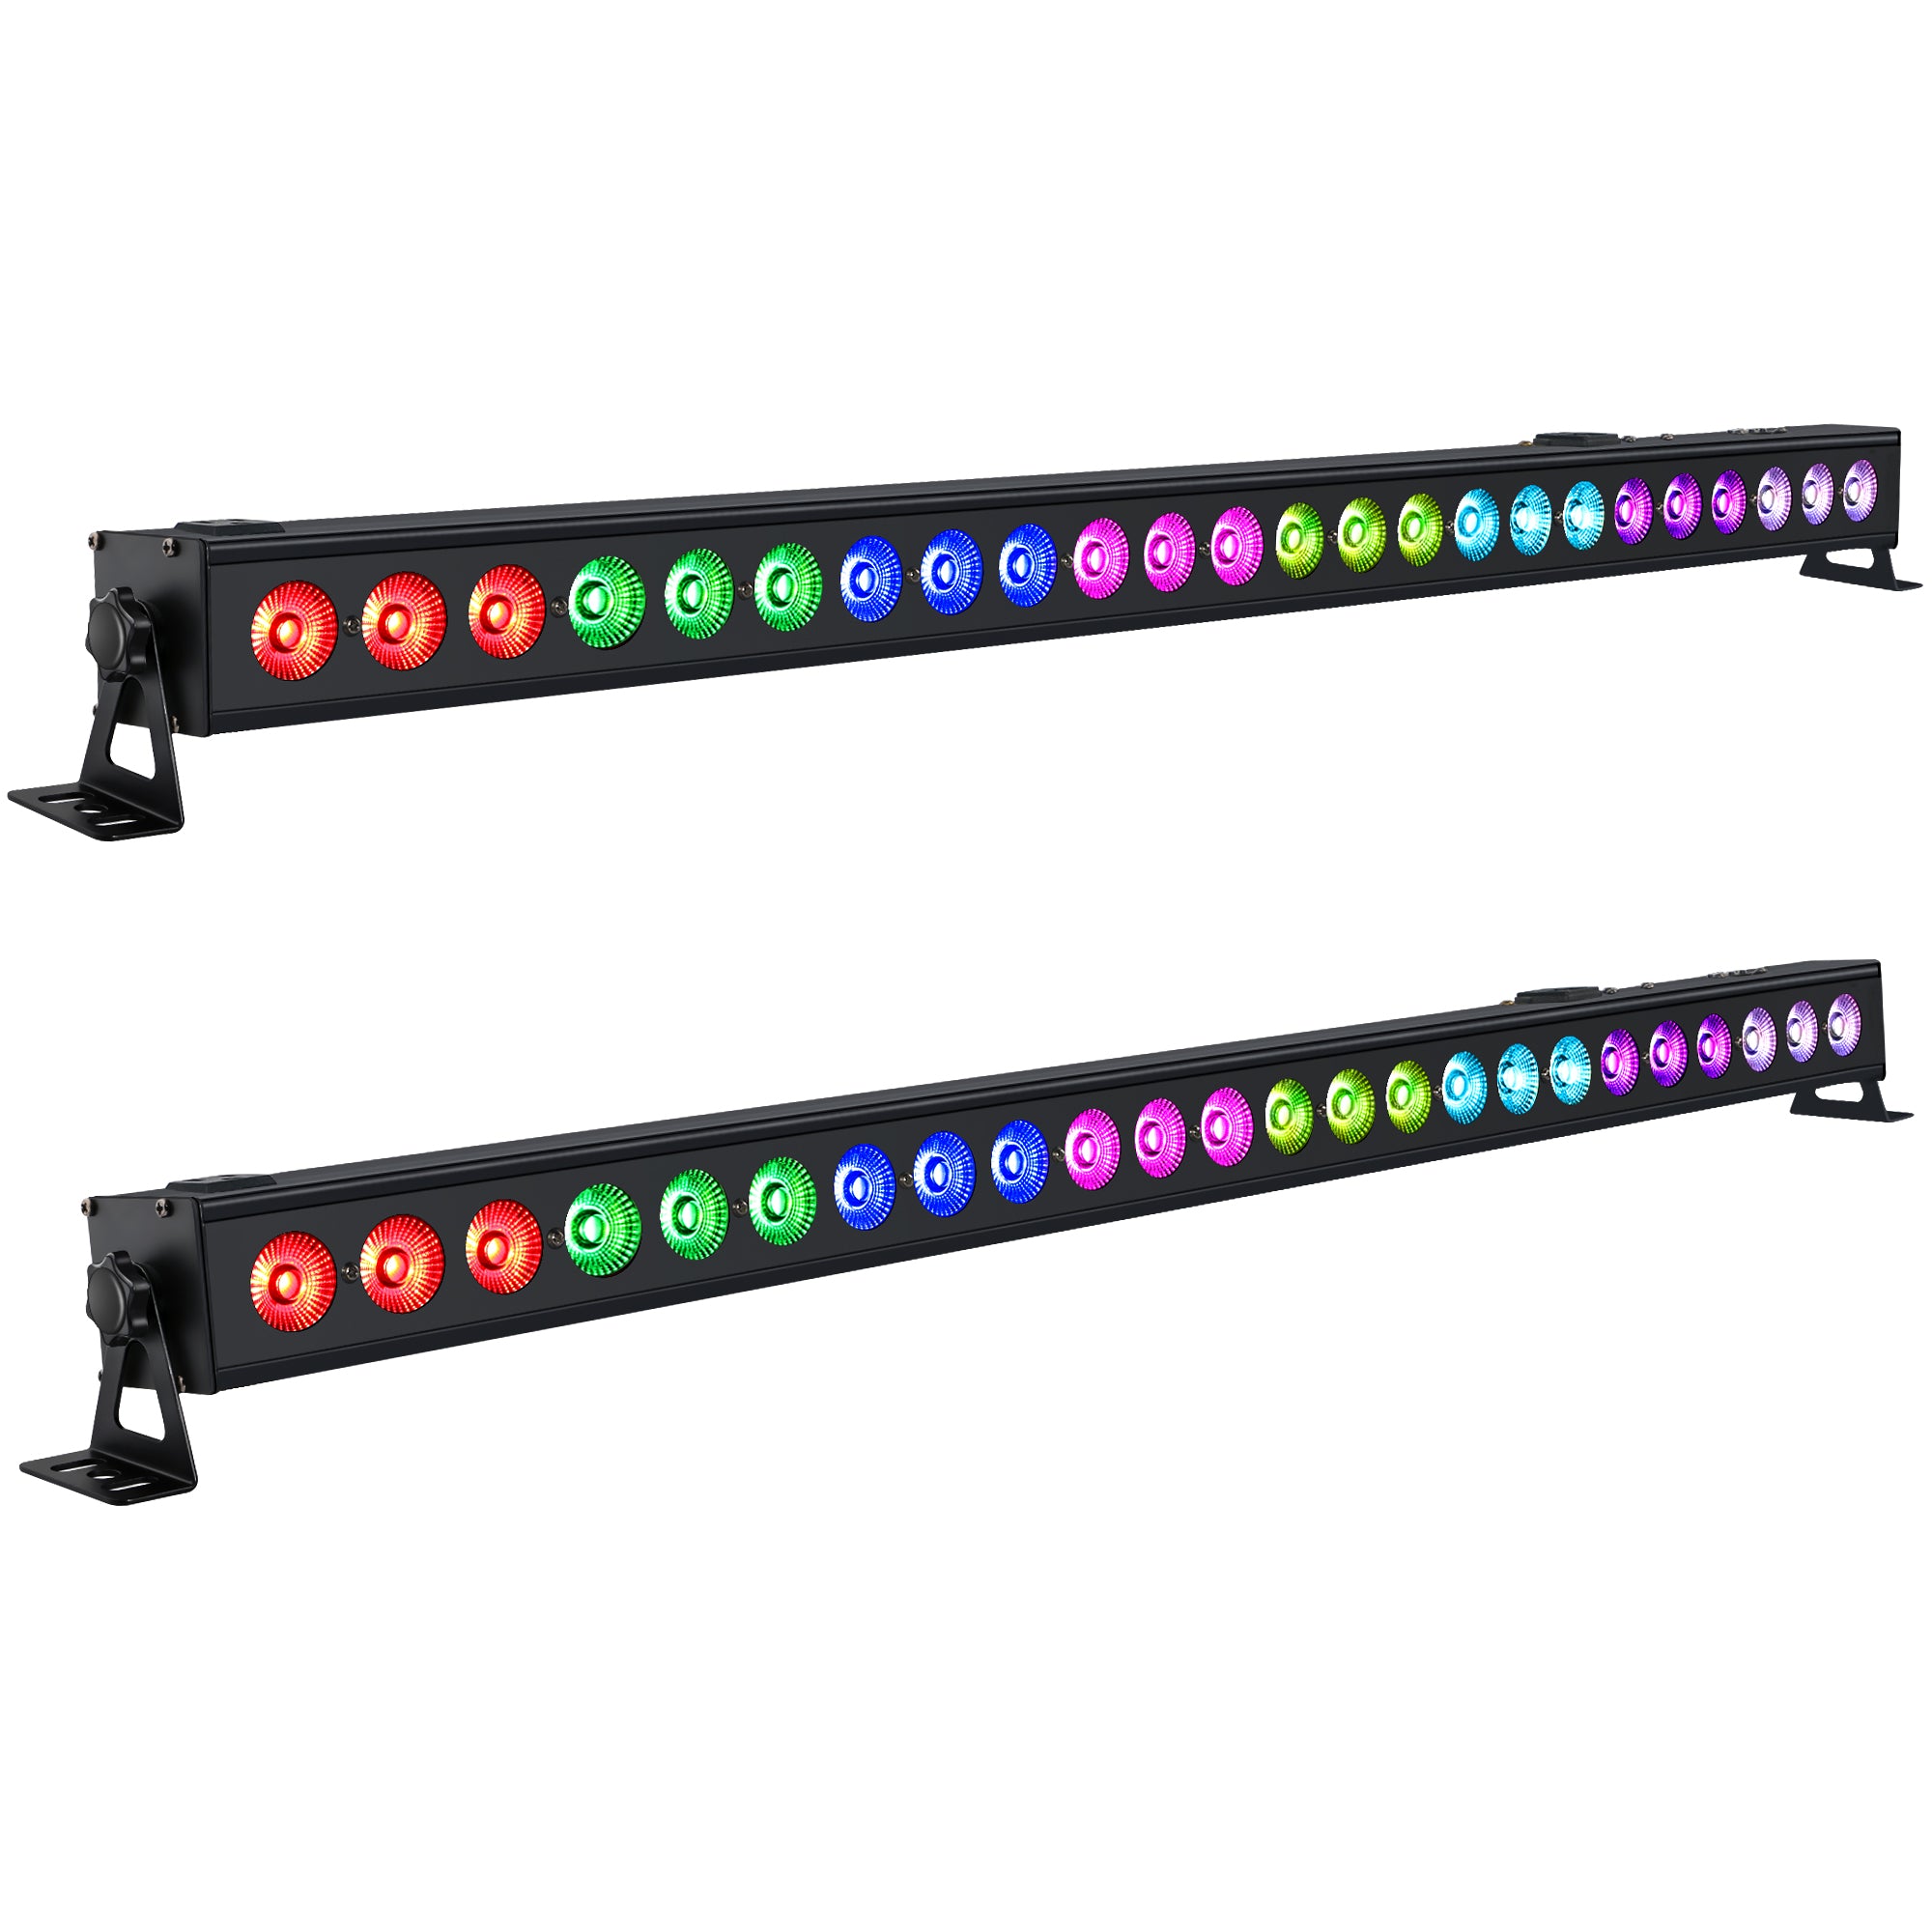 LED Wash Light Bar - 96W, RGBA 4n1